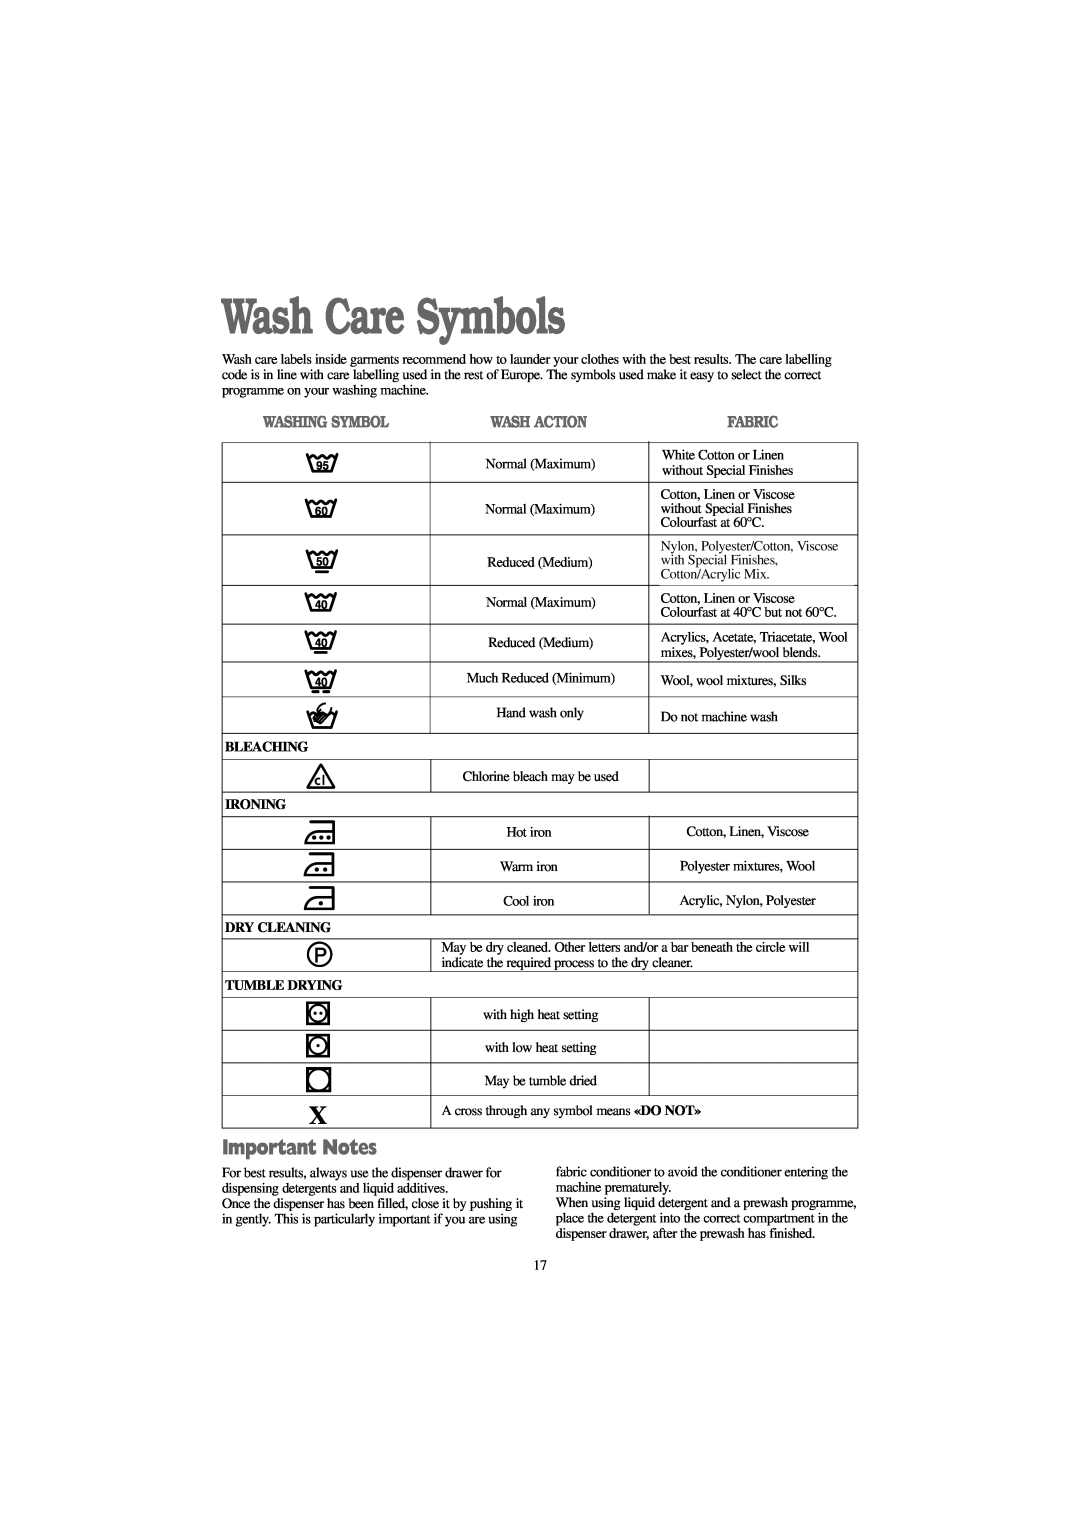 Zanussi WJD 1357 S, WJD 1457 W manual Wash Care Symbols, Important Notes, Bleaching, Ironing, Dry Cleaning, Tumble Drying 